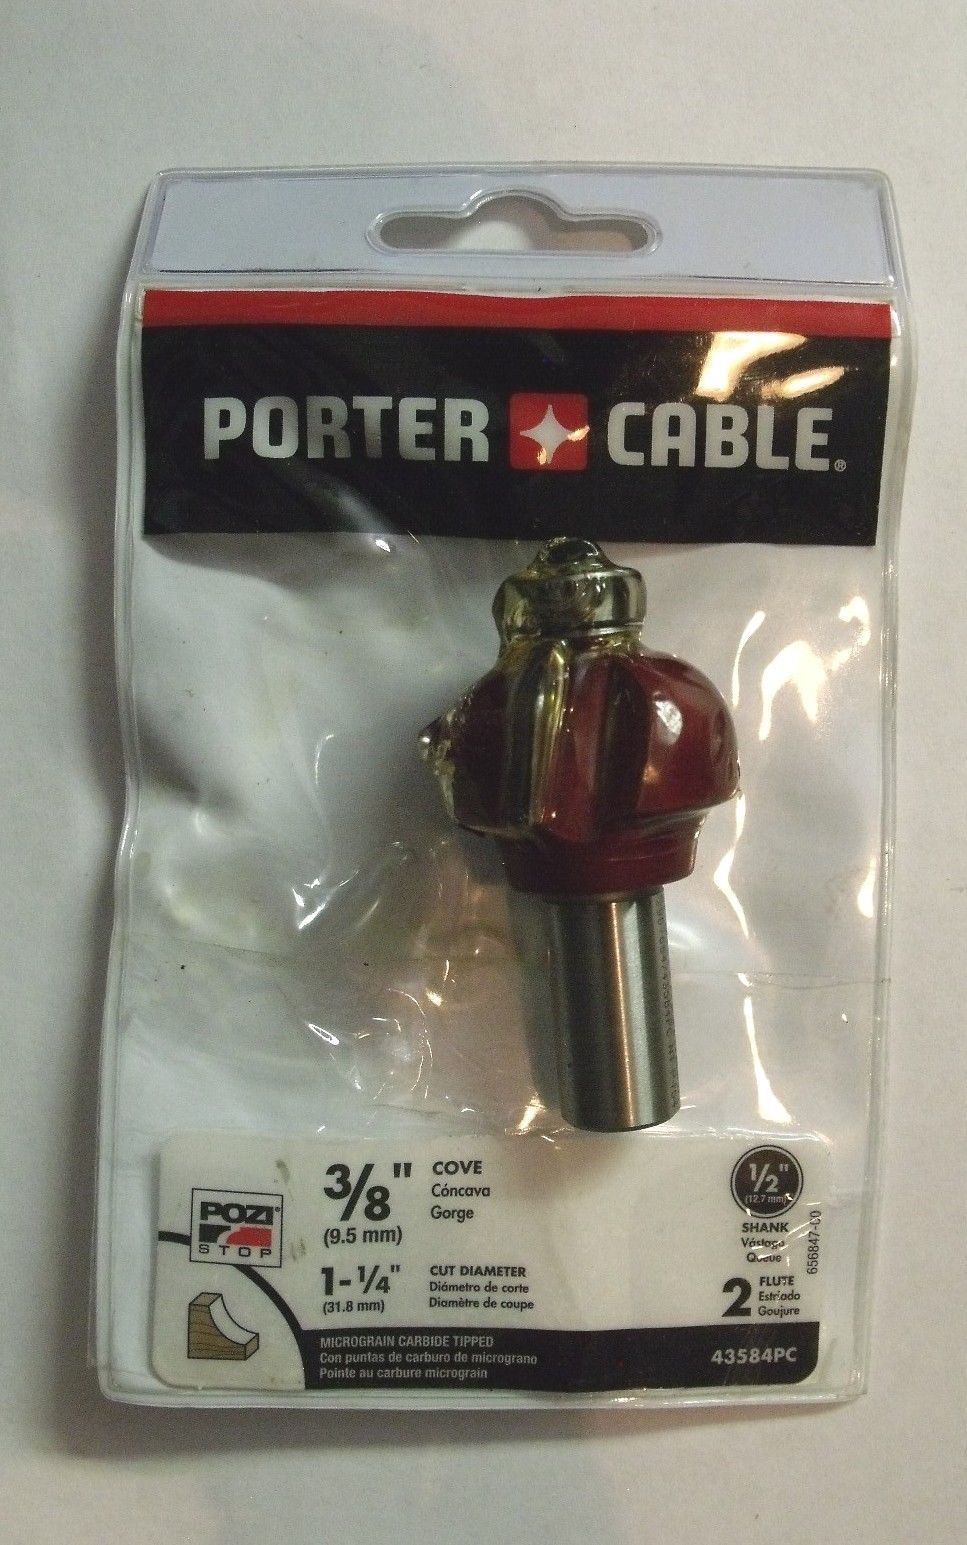 Porter Cable 43584PC 3/8" Cove Router Bit 1/2" Shank